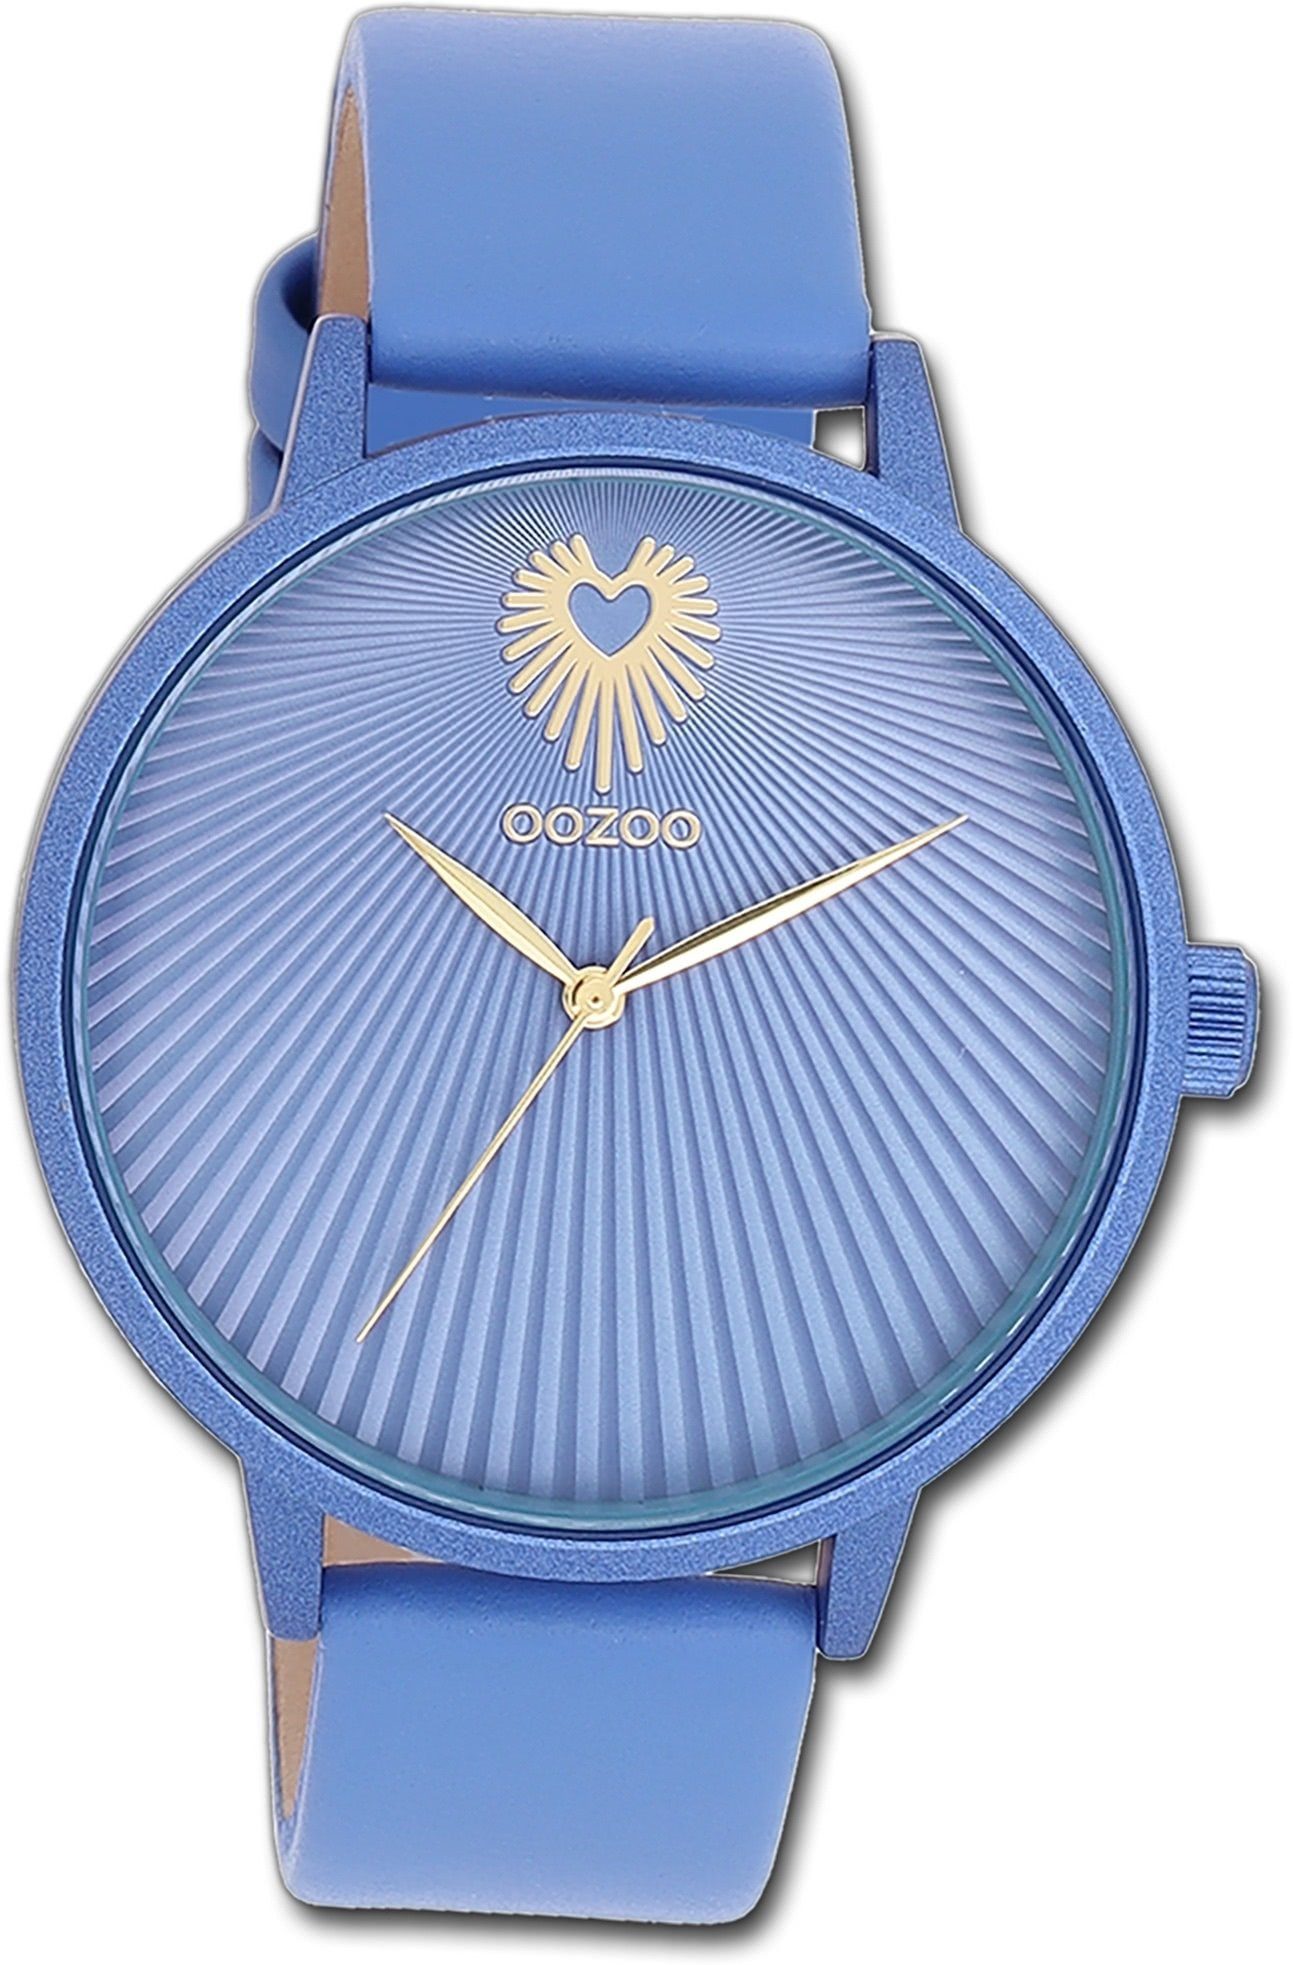 OOZOO Quarzuhr (ca. Oozoo groß rundes Lederarmband 42mm) blau, Damen Damenuhr Gehäuse, Timepieces, Armbanduhr